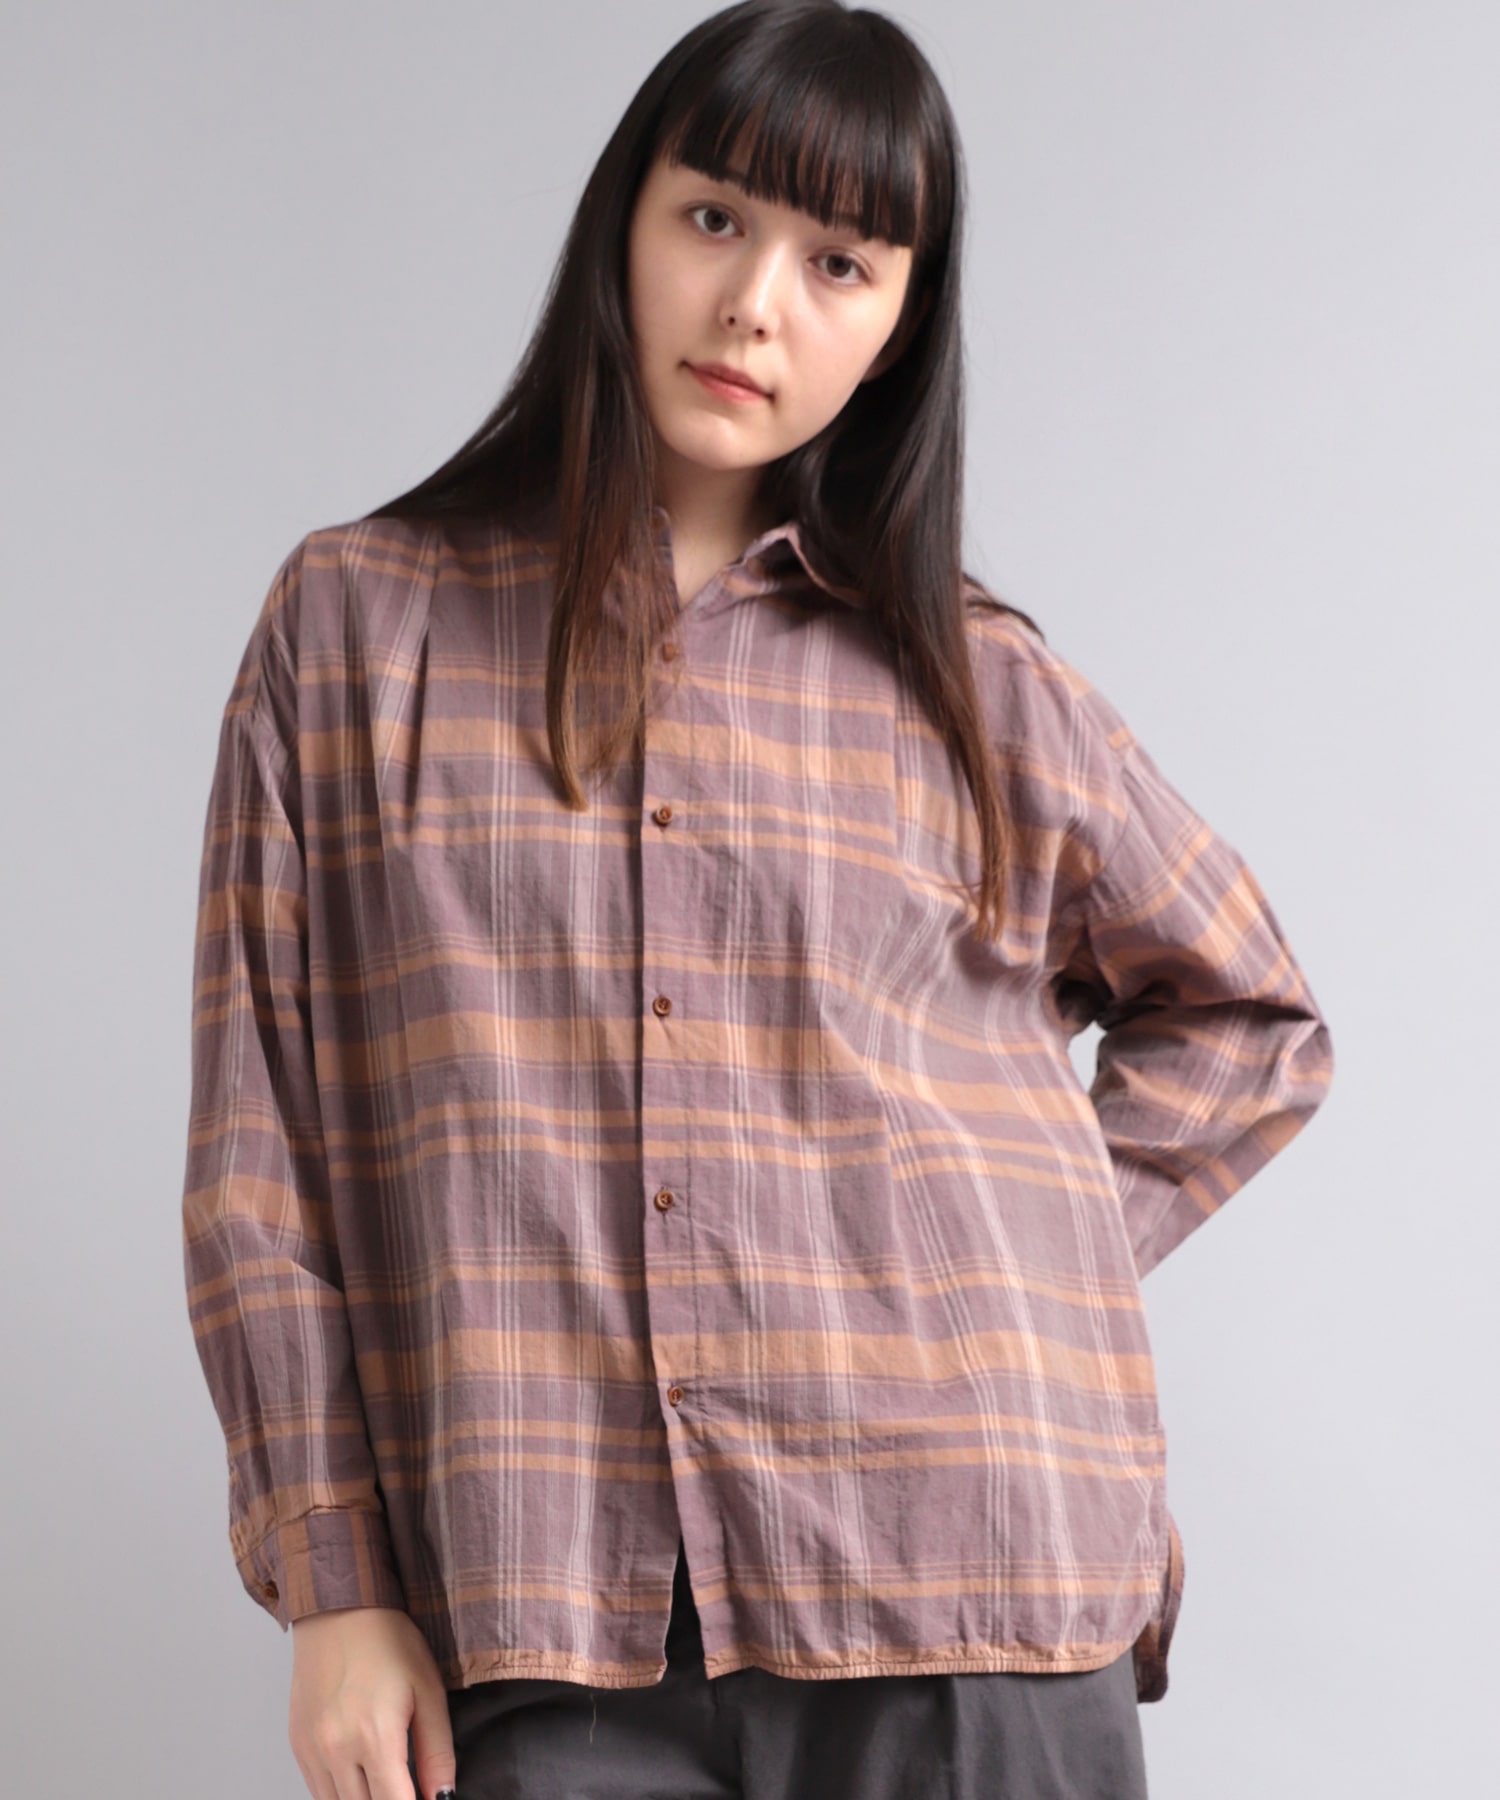 B2738 40/-ムラ糸コットンチェックシャツ